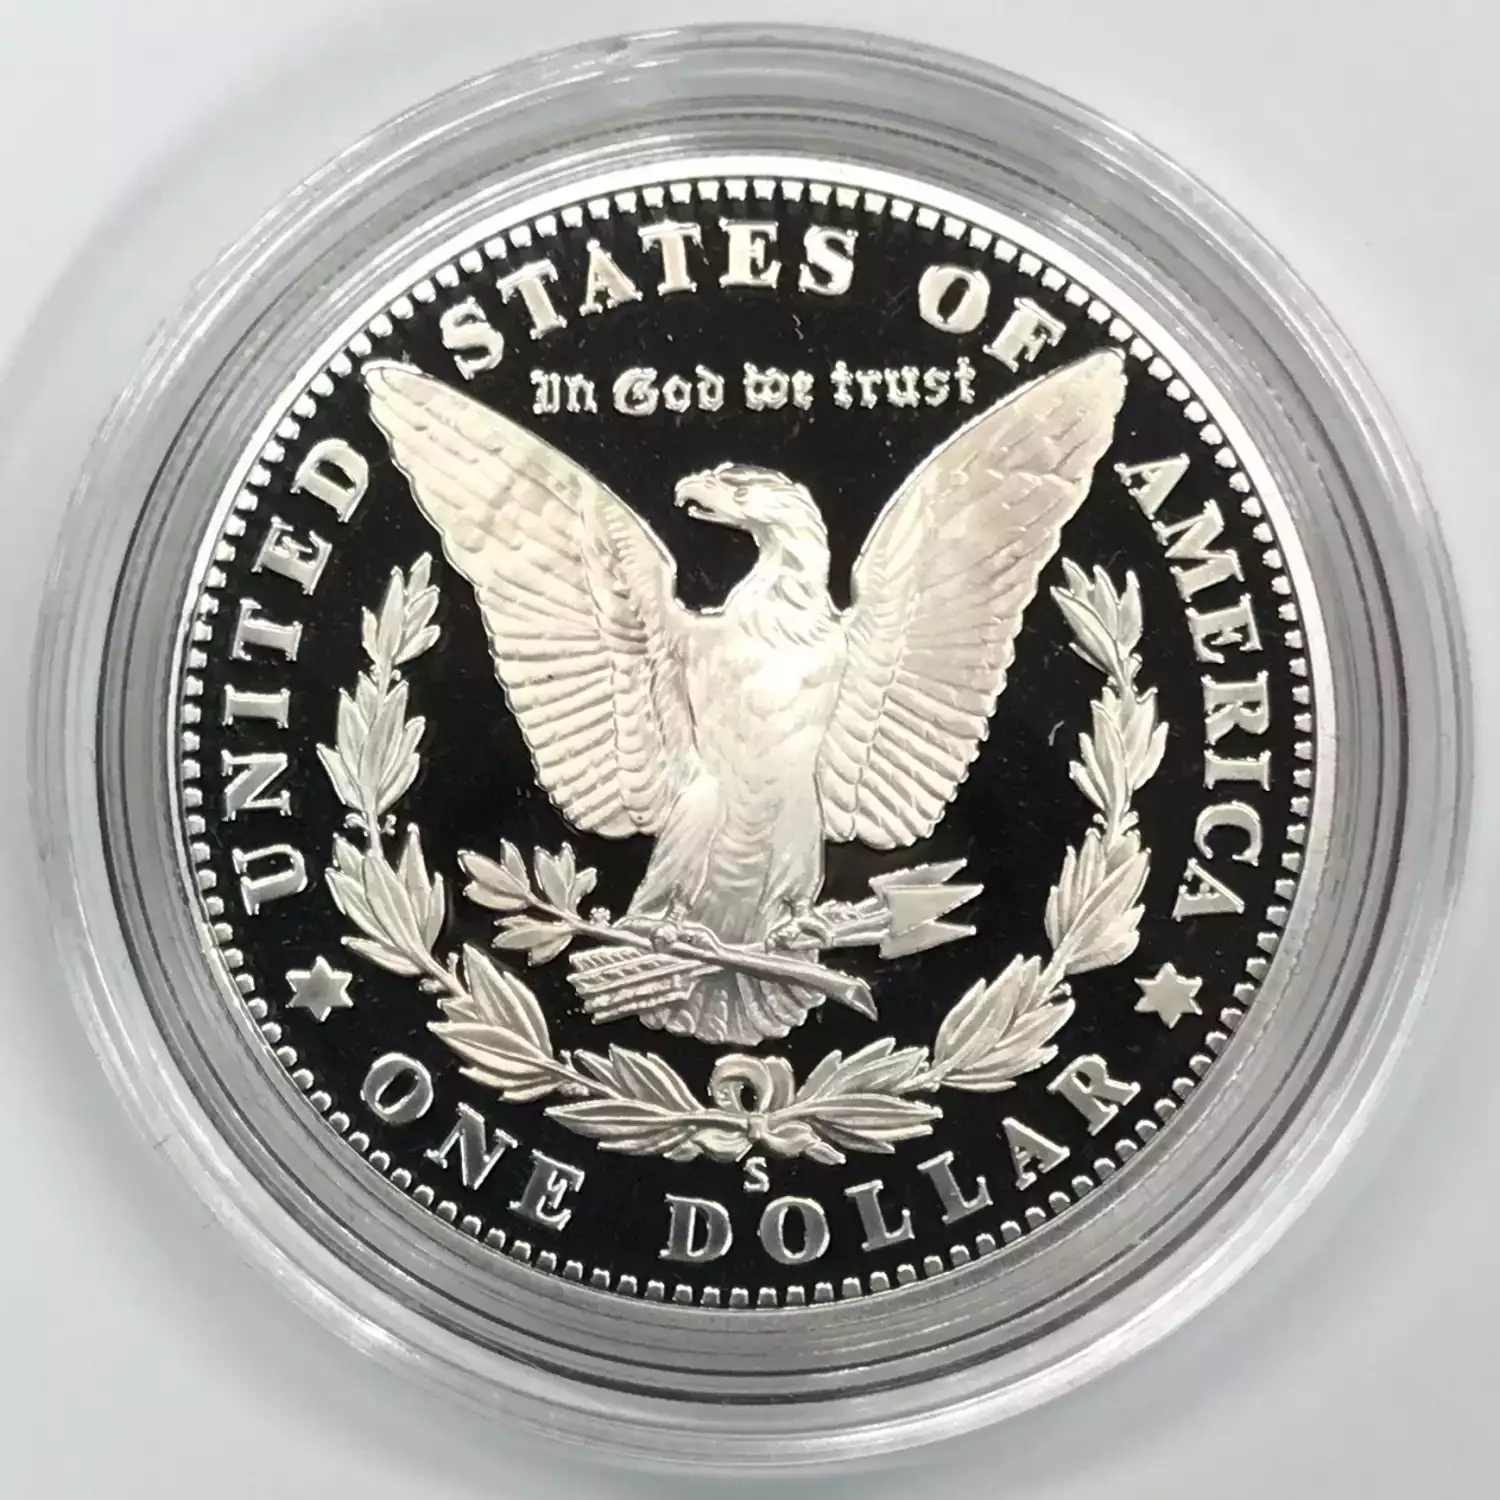 2006-S San Francisco Old Mint Proof Silver Dollar w US Mint OGP - Box & COA